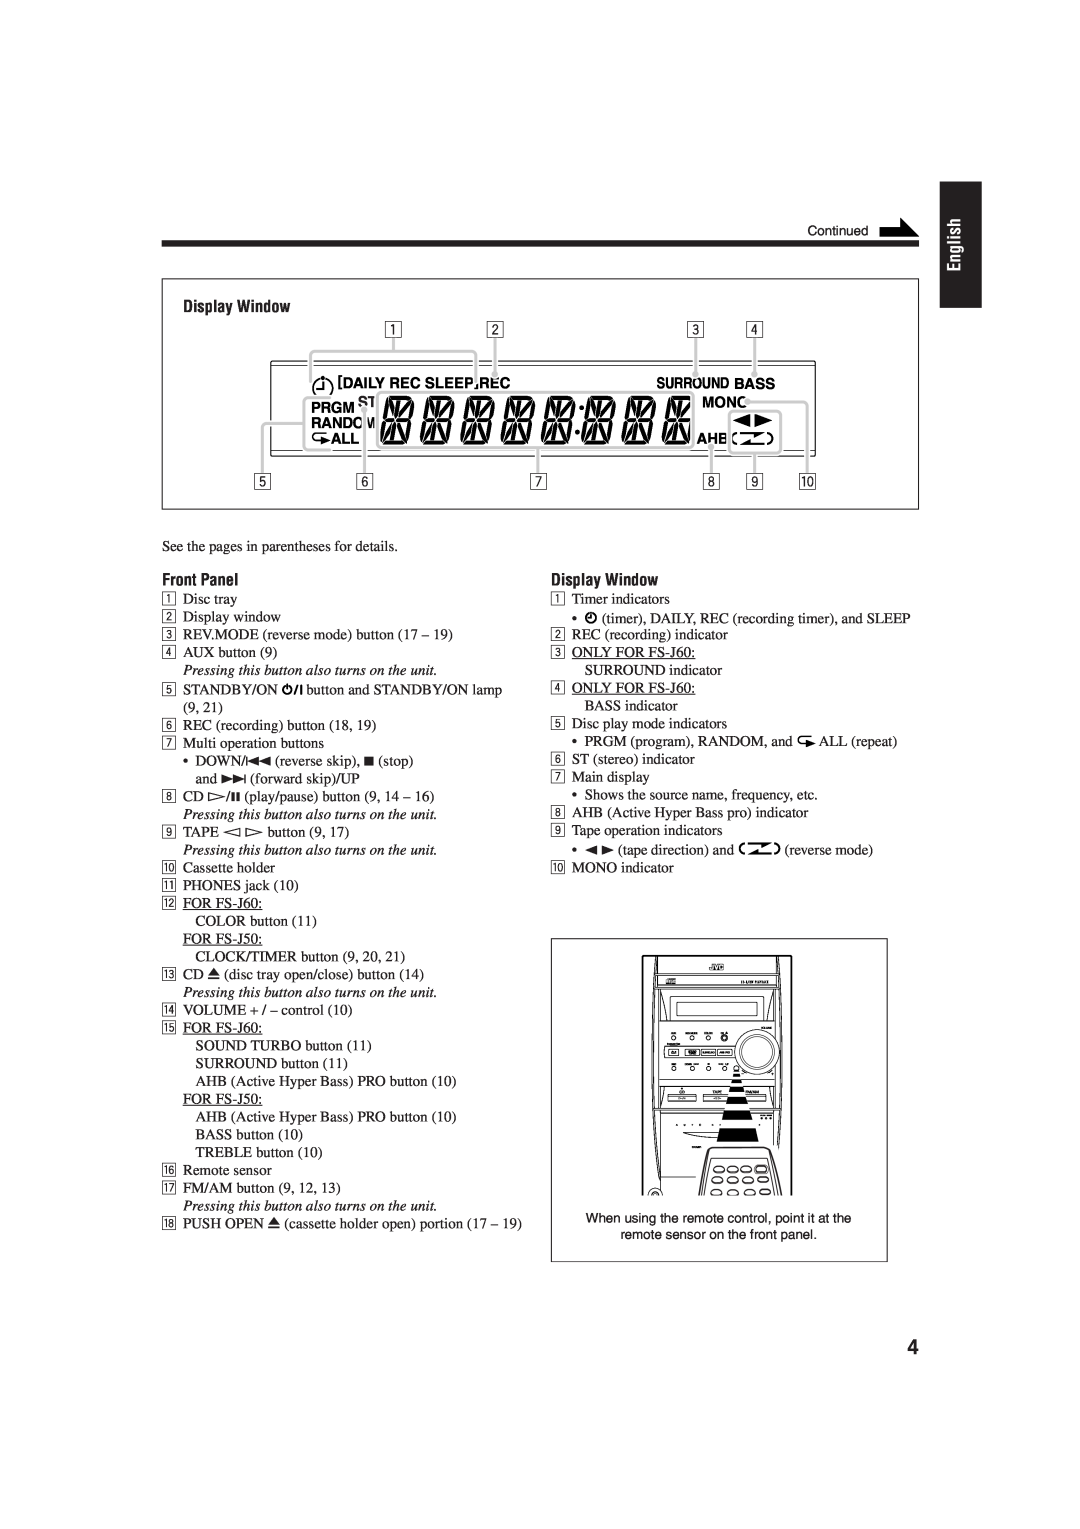 JVC FS-J60, FS-J50 manual 8 9 p, Display Window, Random, English, Front Panel, Daily Rec Sleeprec, Mono 